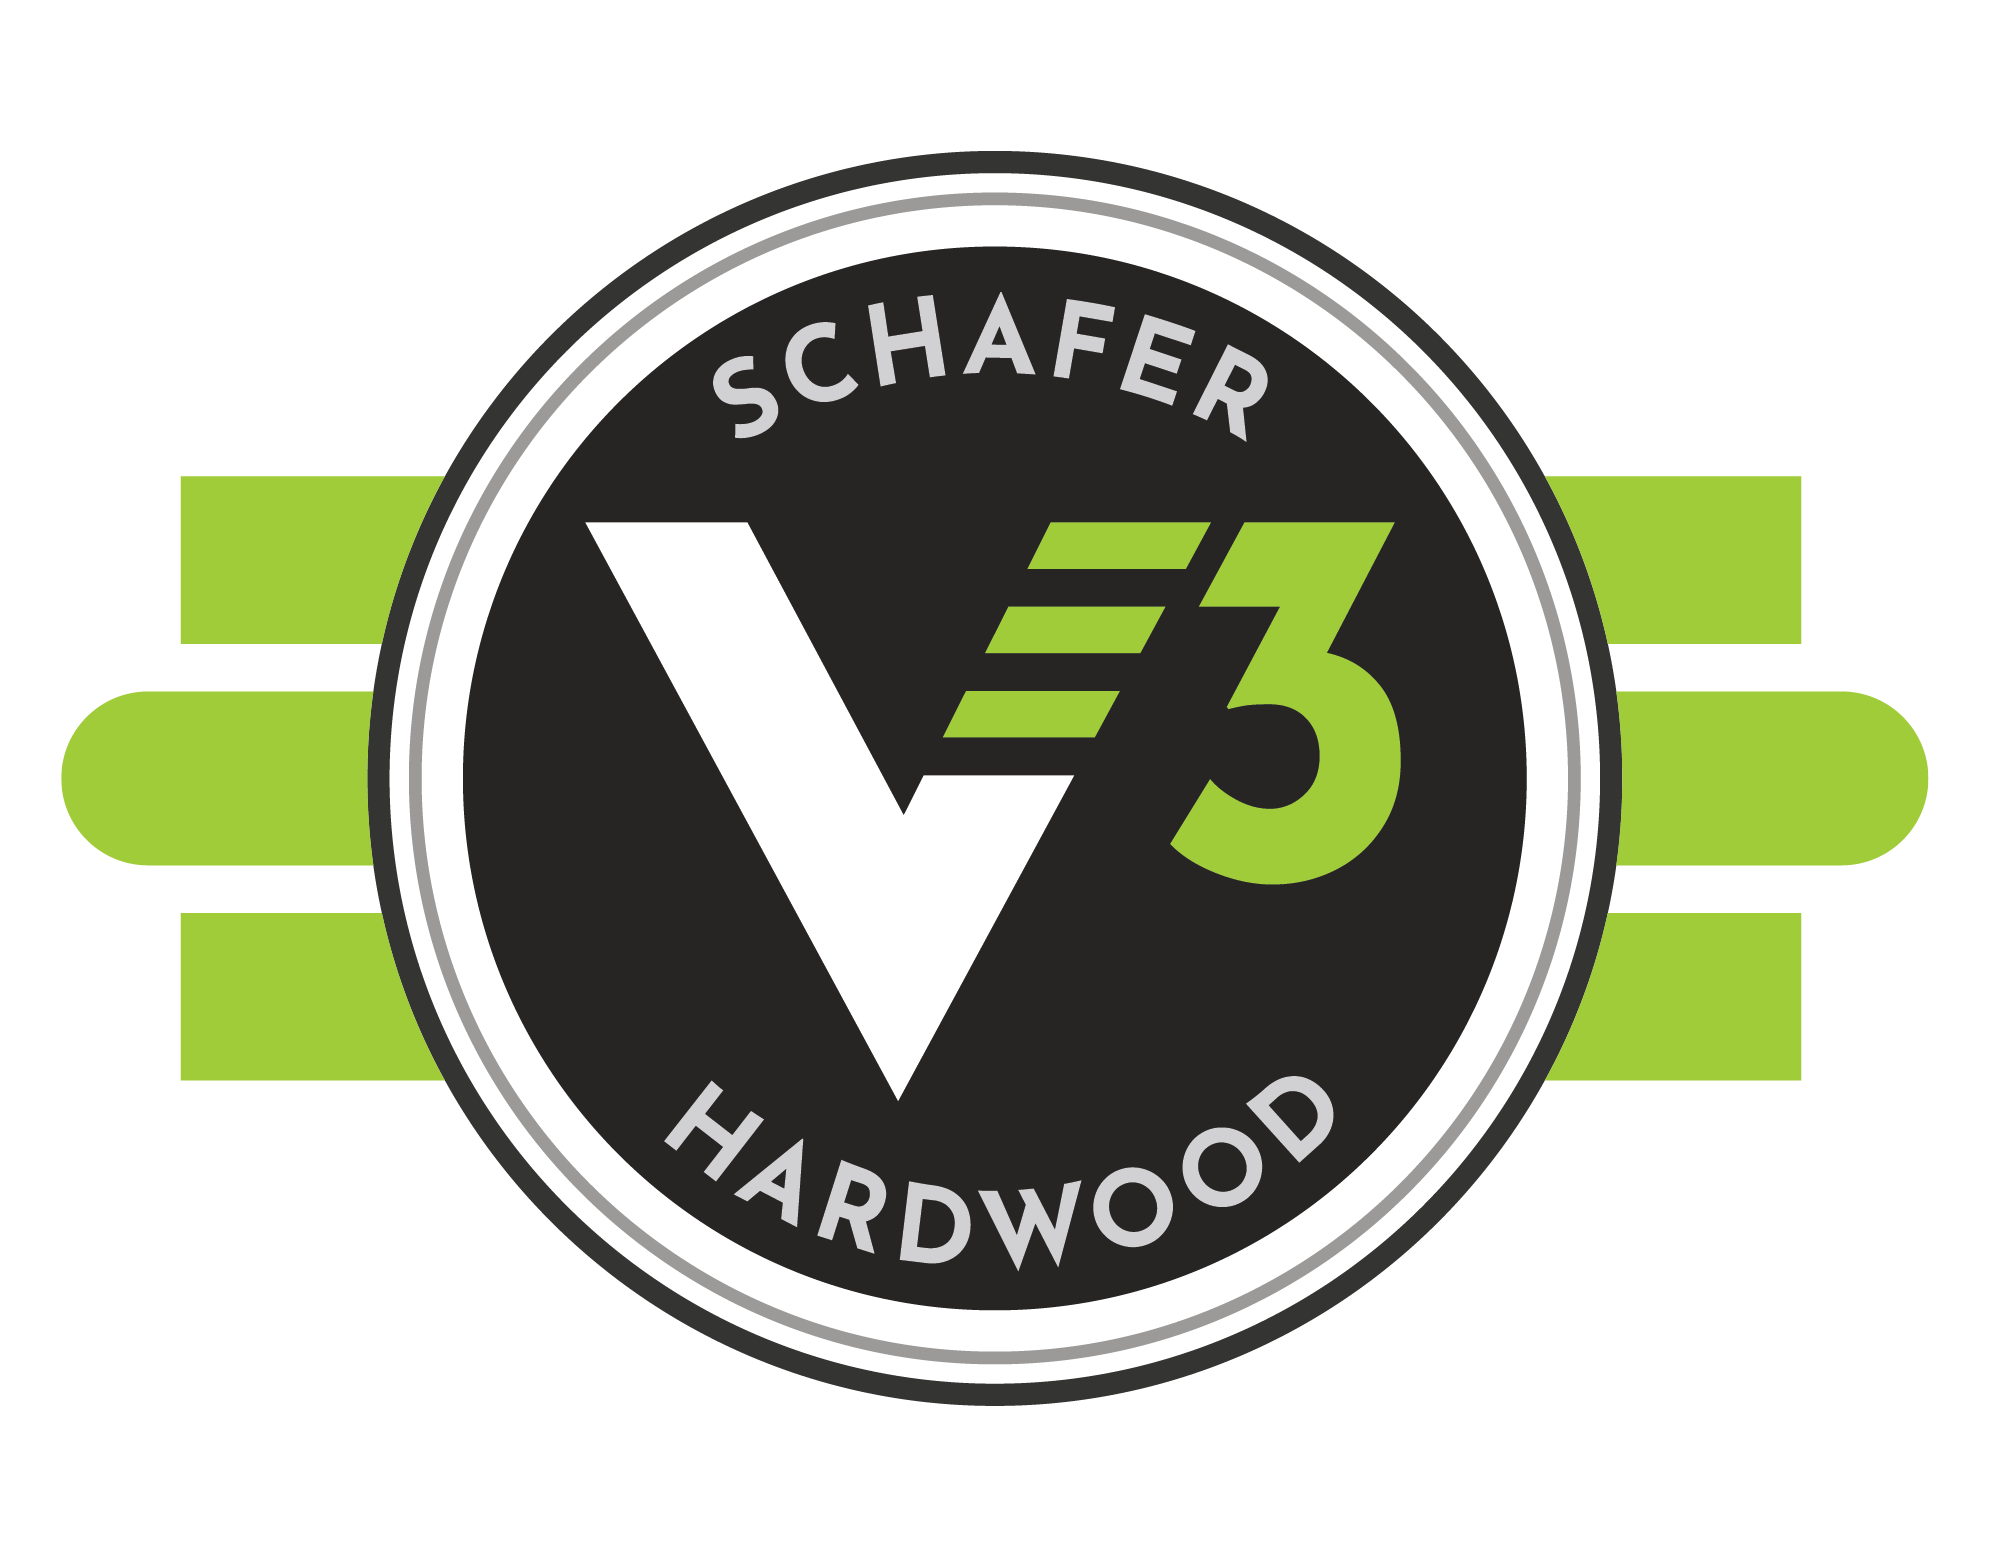 Schafer Hardwood Flooring Company's Logo.